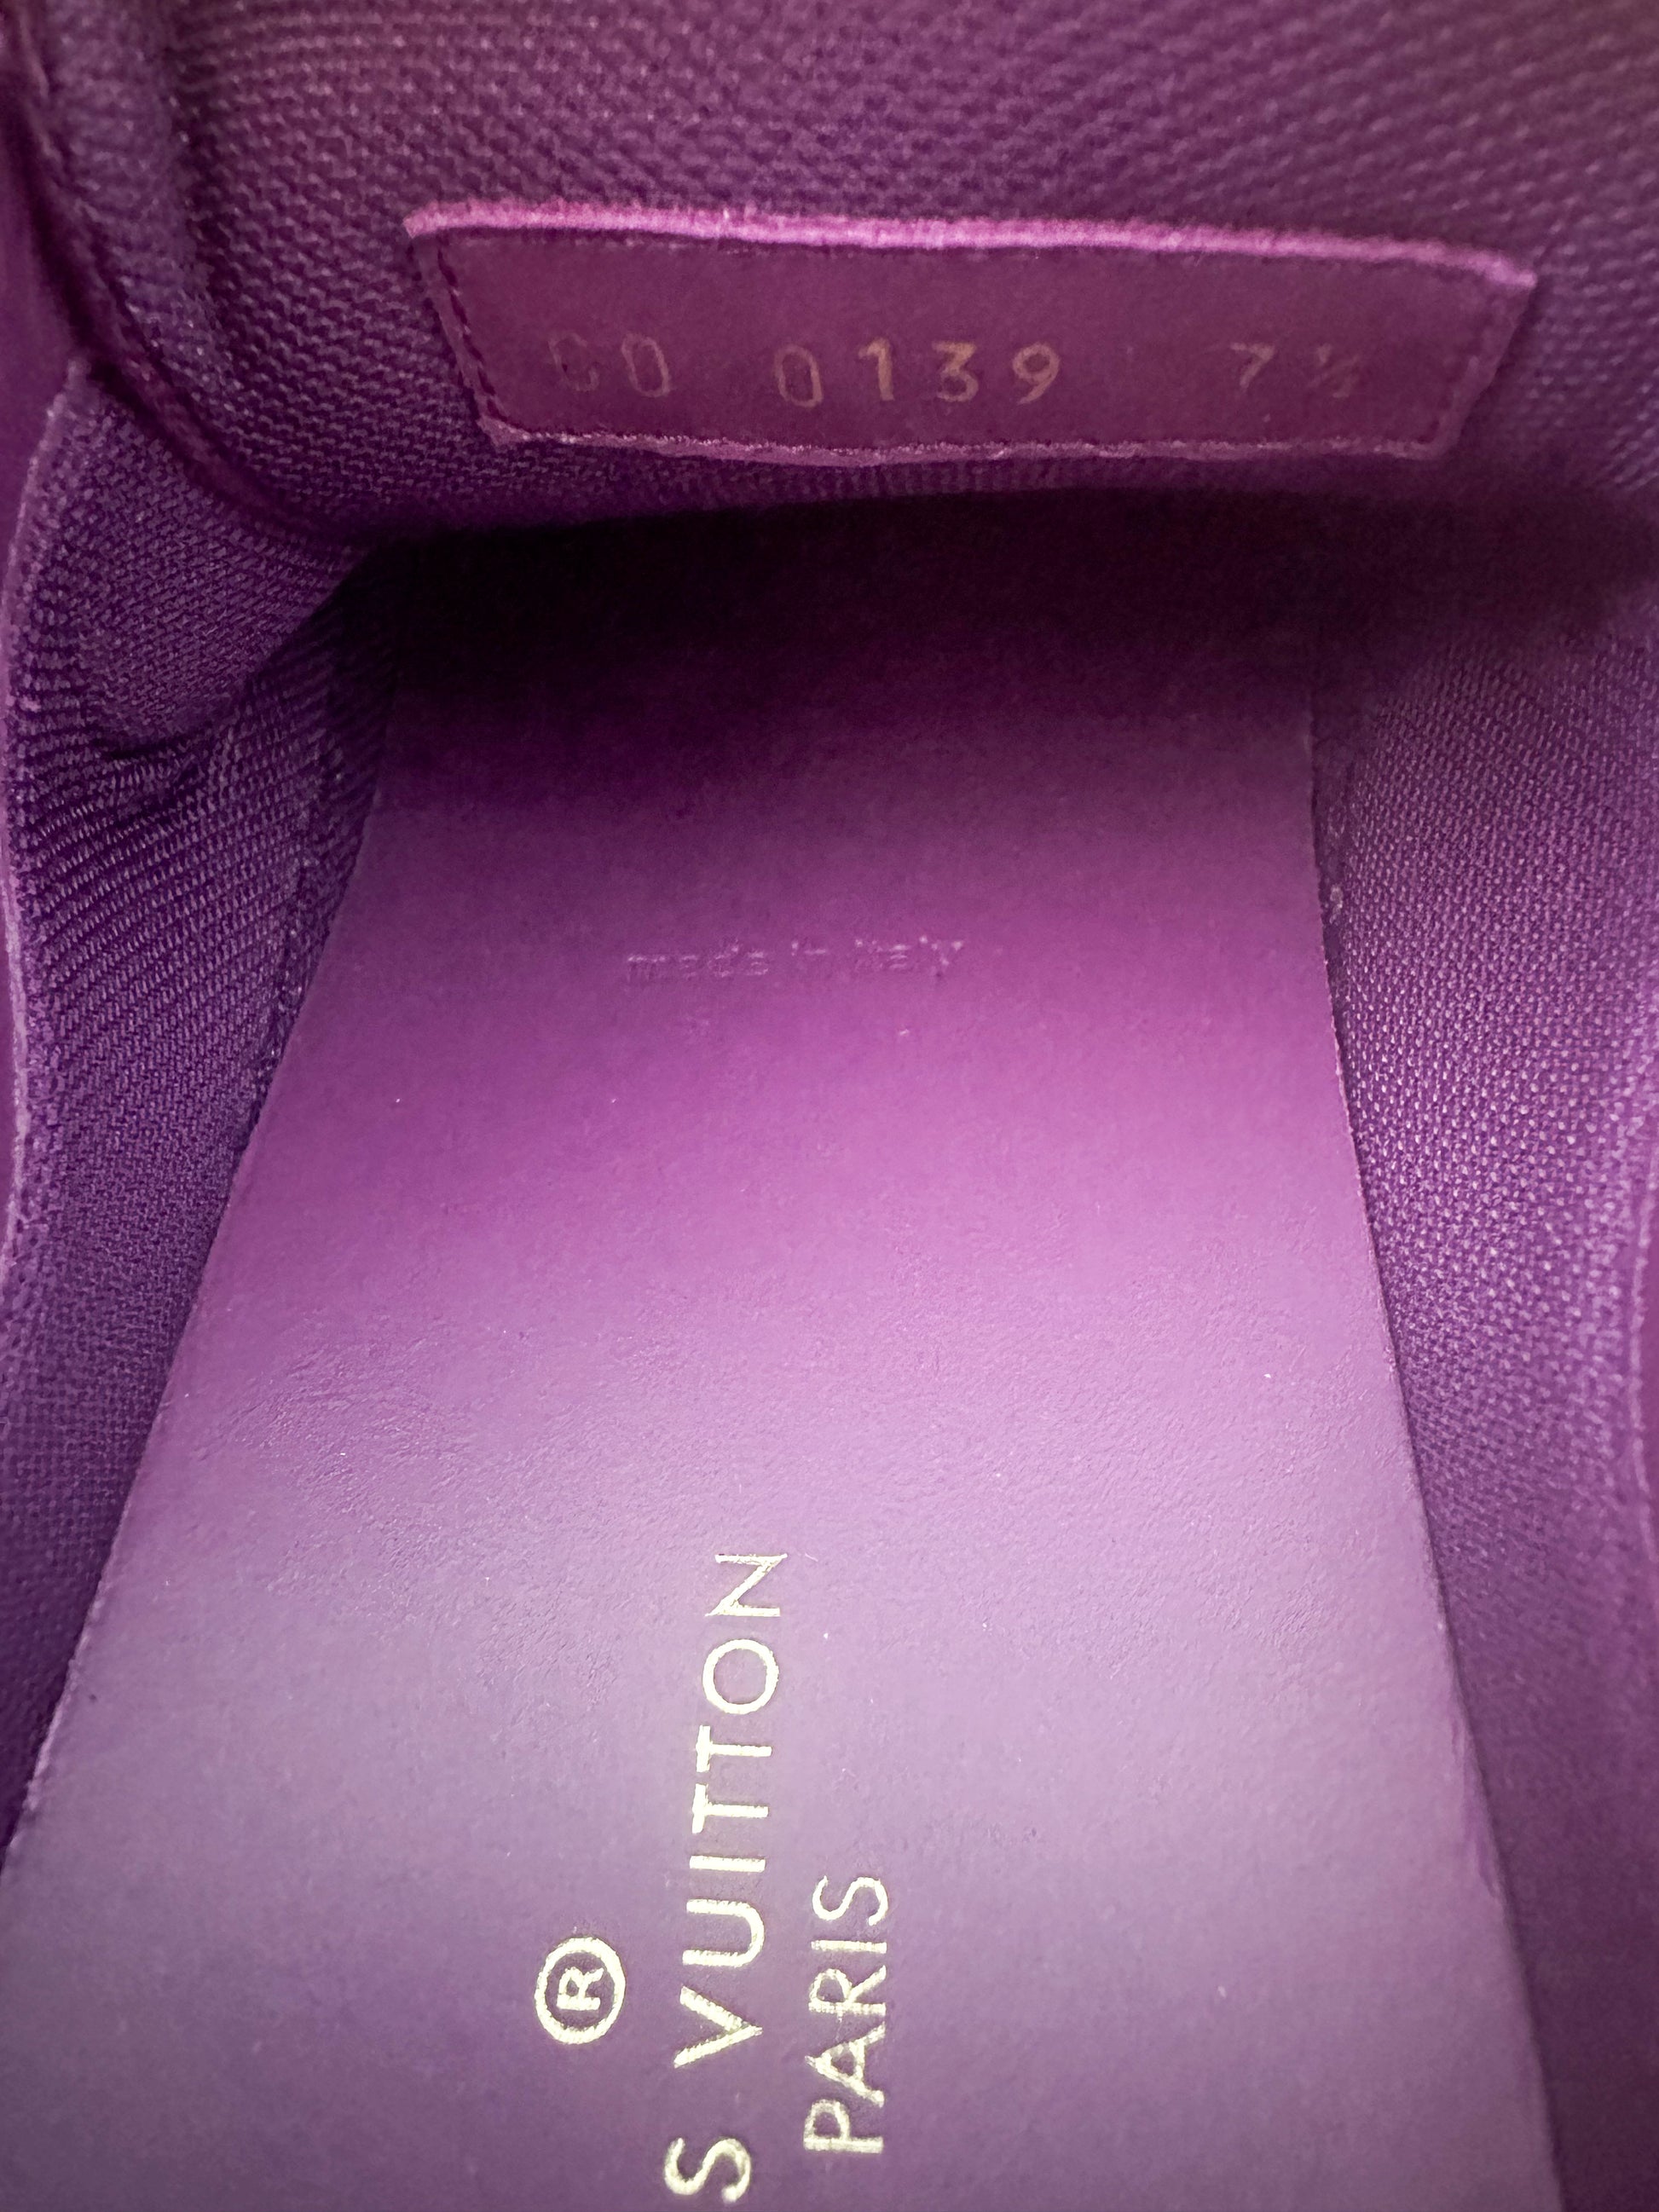 LOUIS VUITTON sneakers Trocadero Monogram denim/Corduroy purple